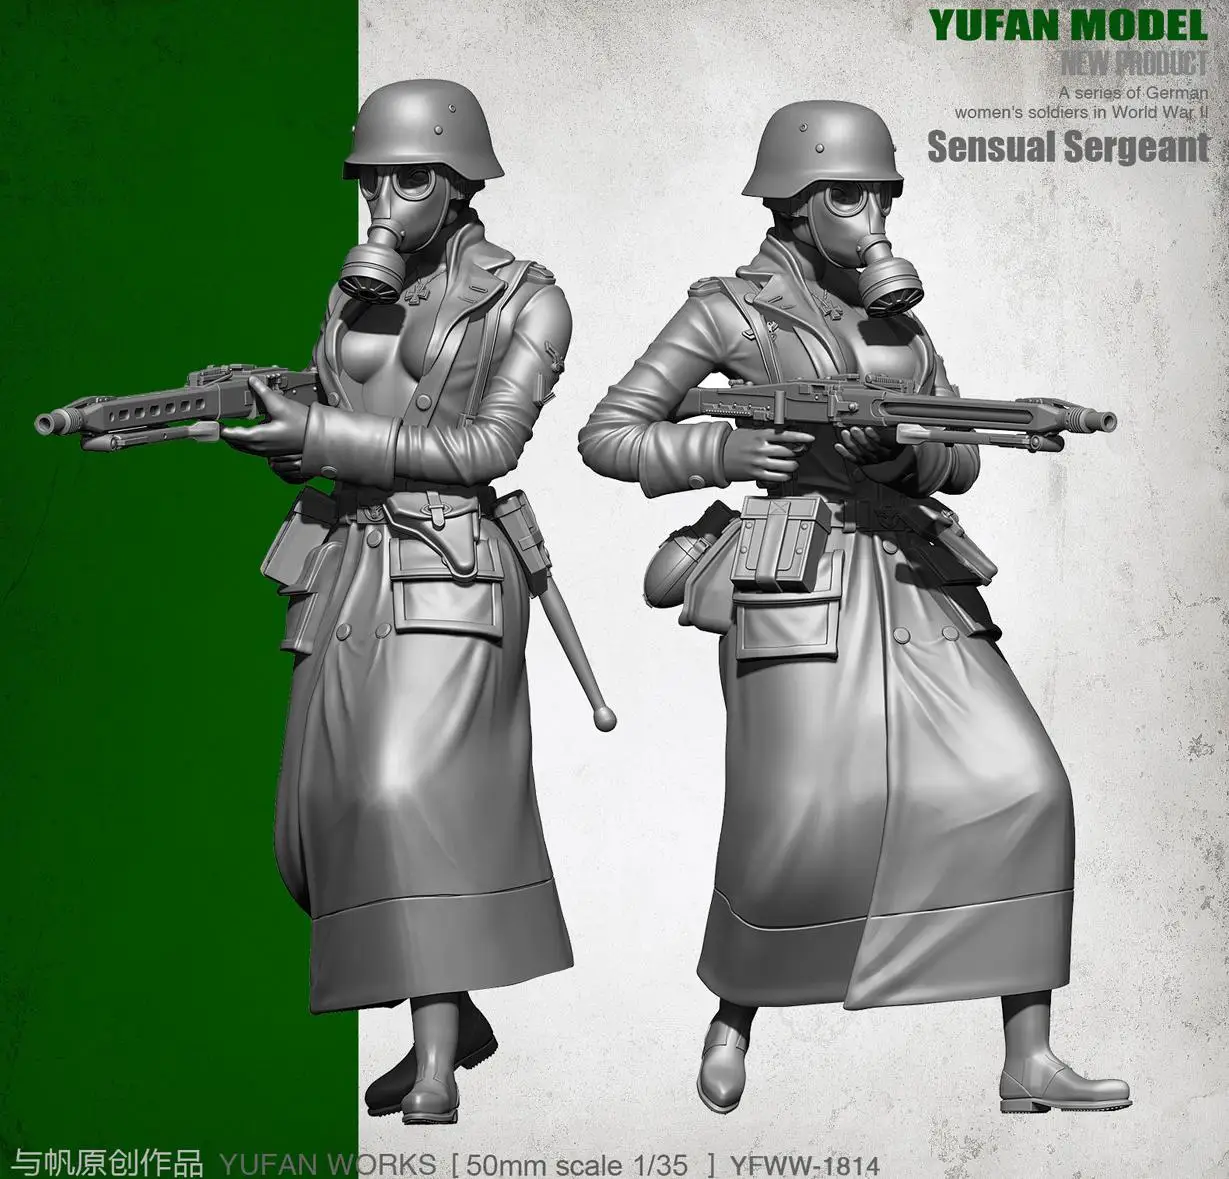 1/35 Scale Resin Figures Model Kit Beauty Female Soldier Unpainted Unassambled 